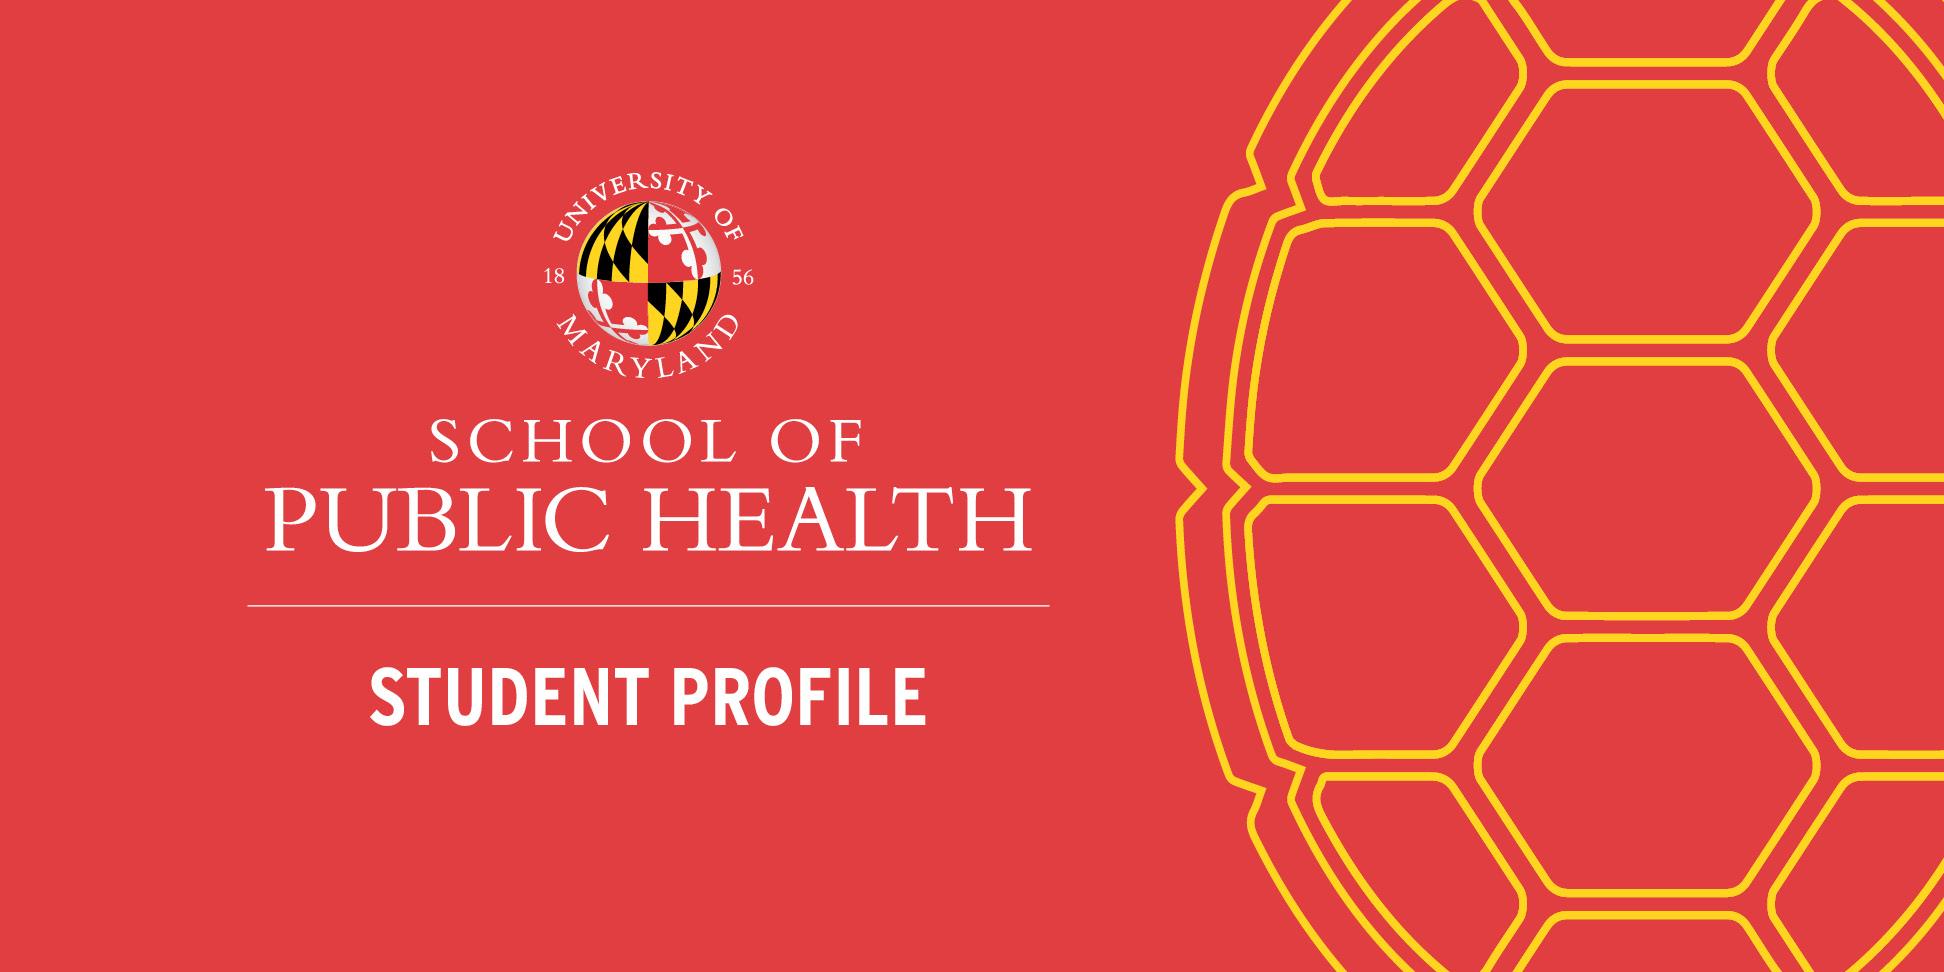 School of Public Health Student Profile